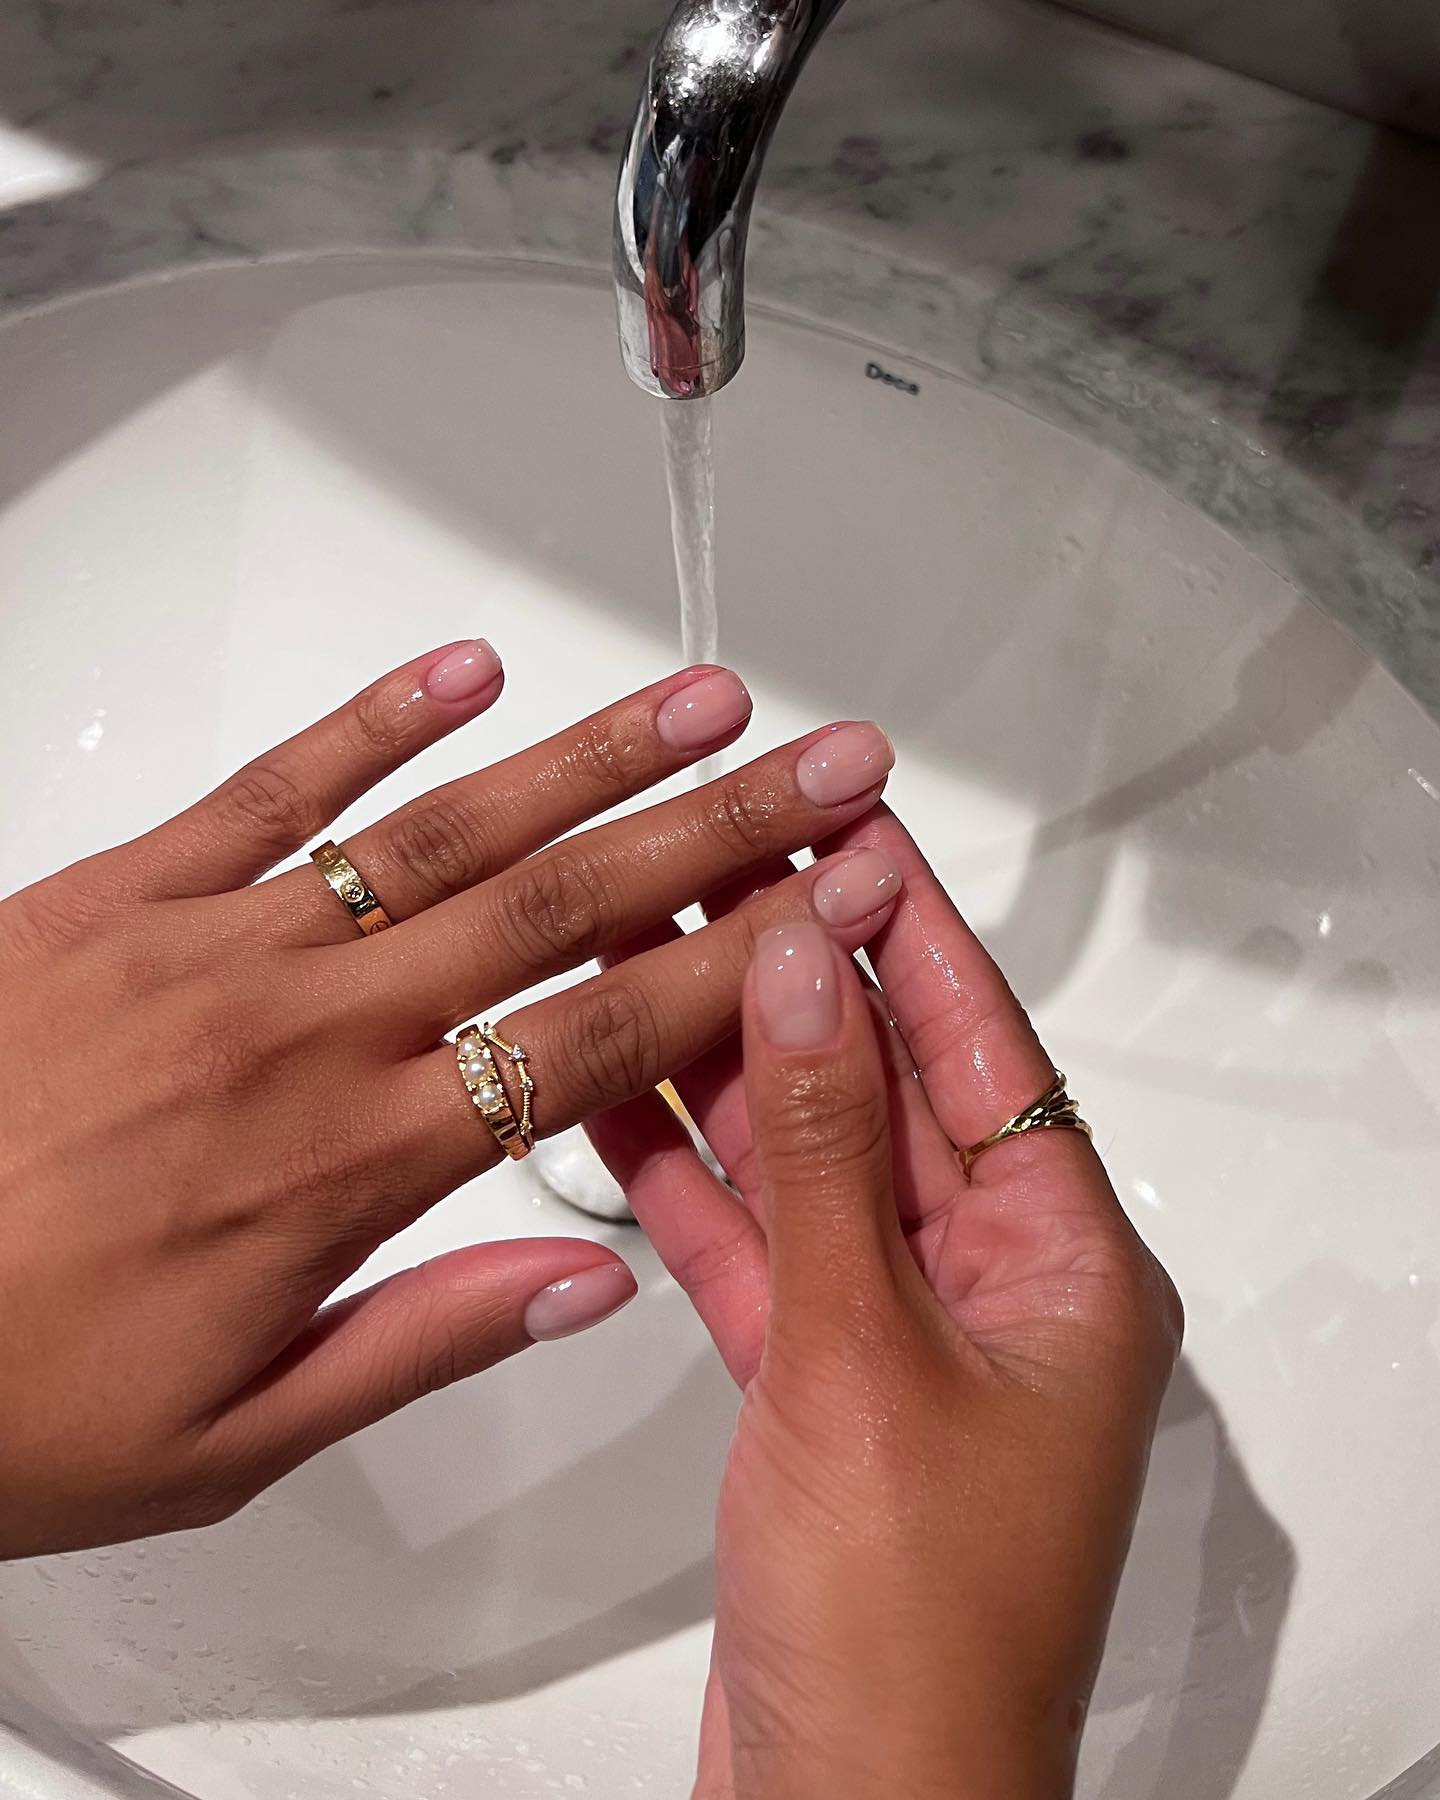 OPI Bubble Bath nail polish manicure